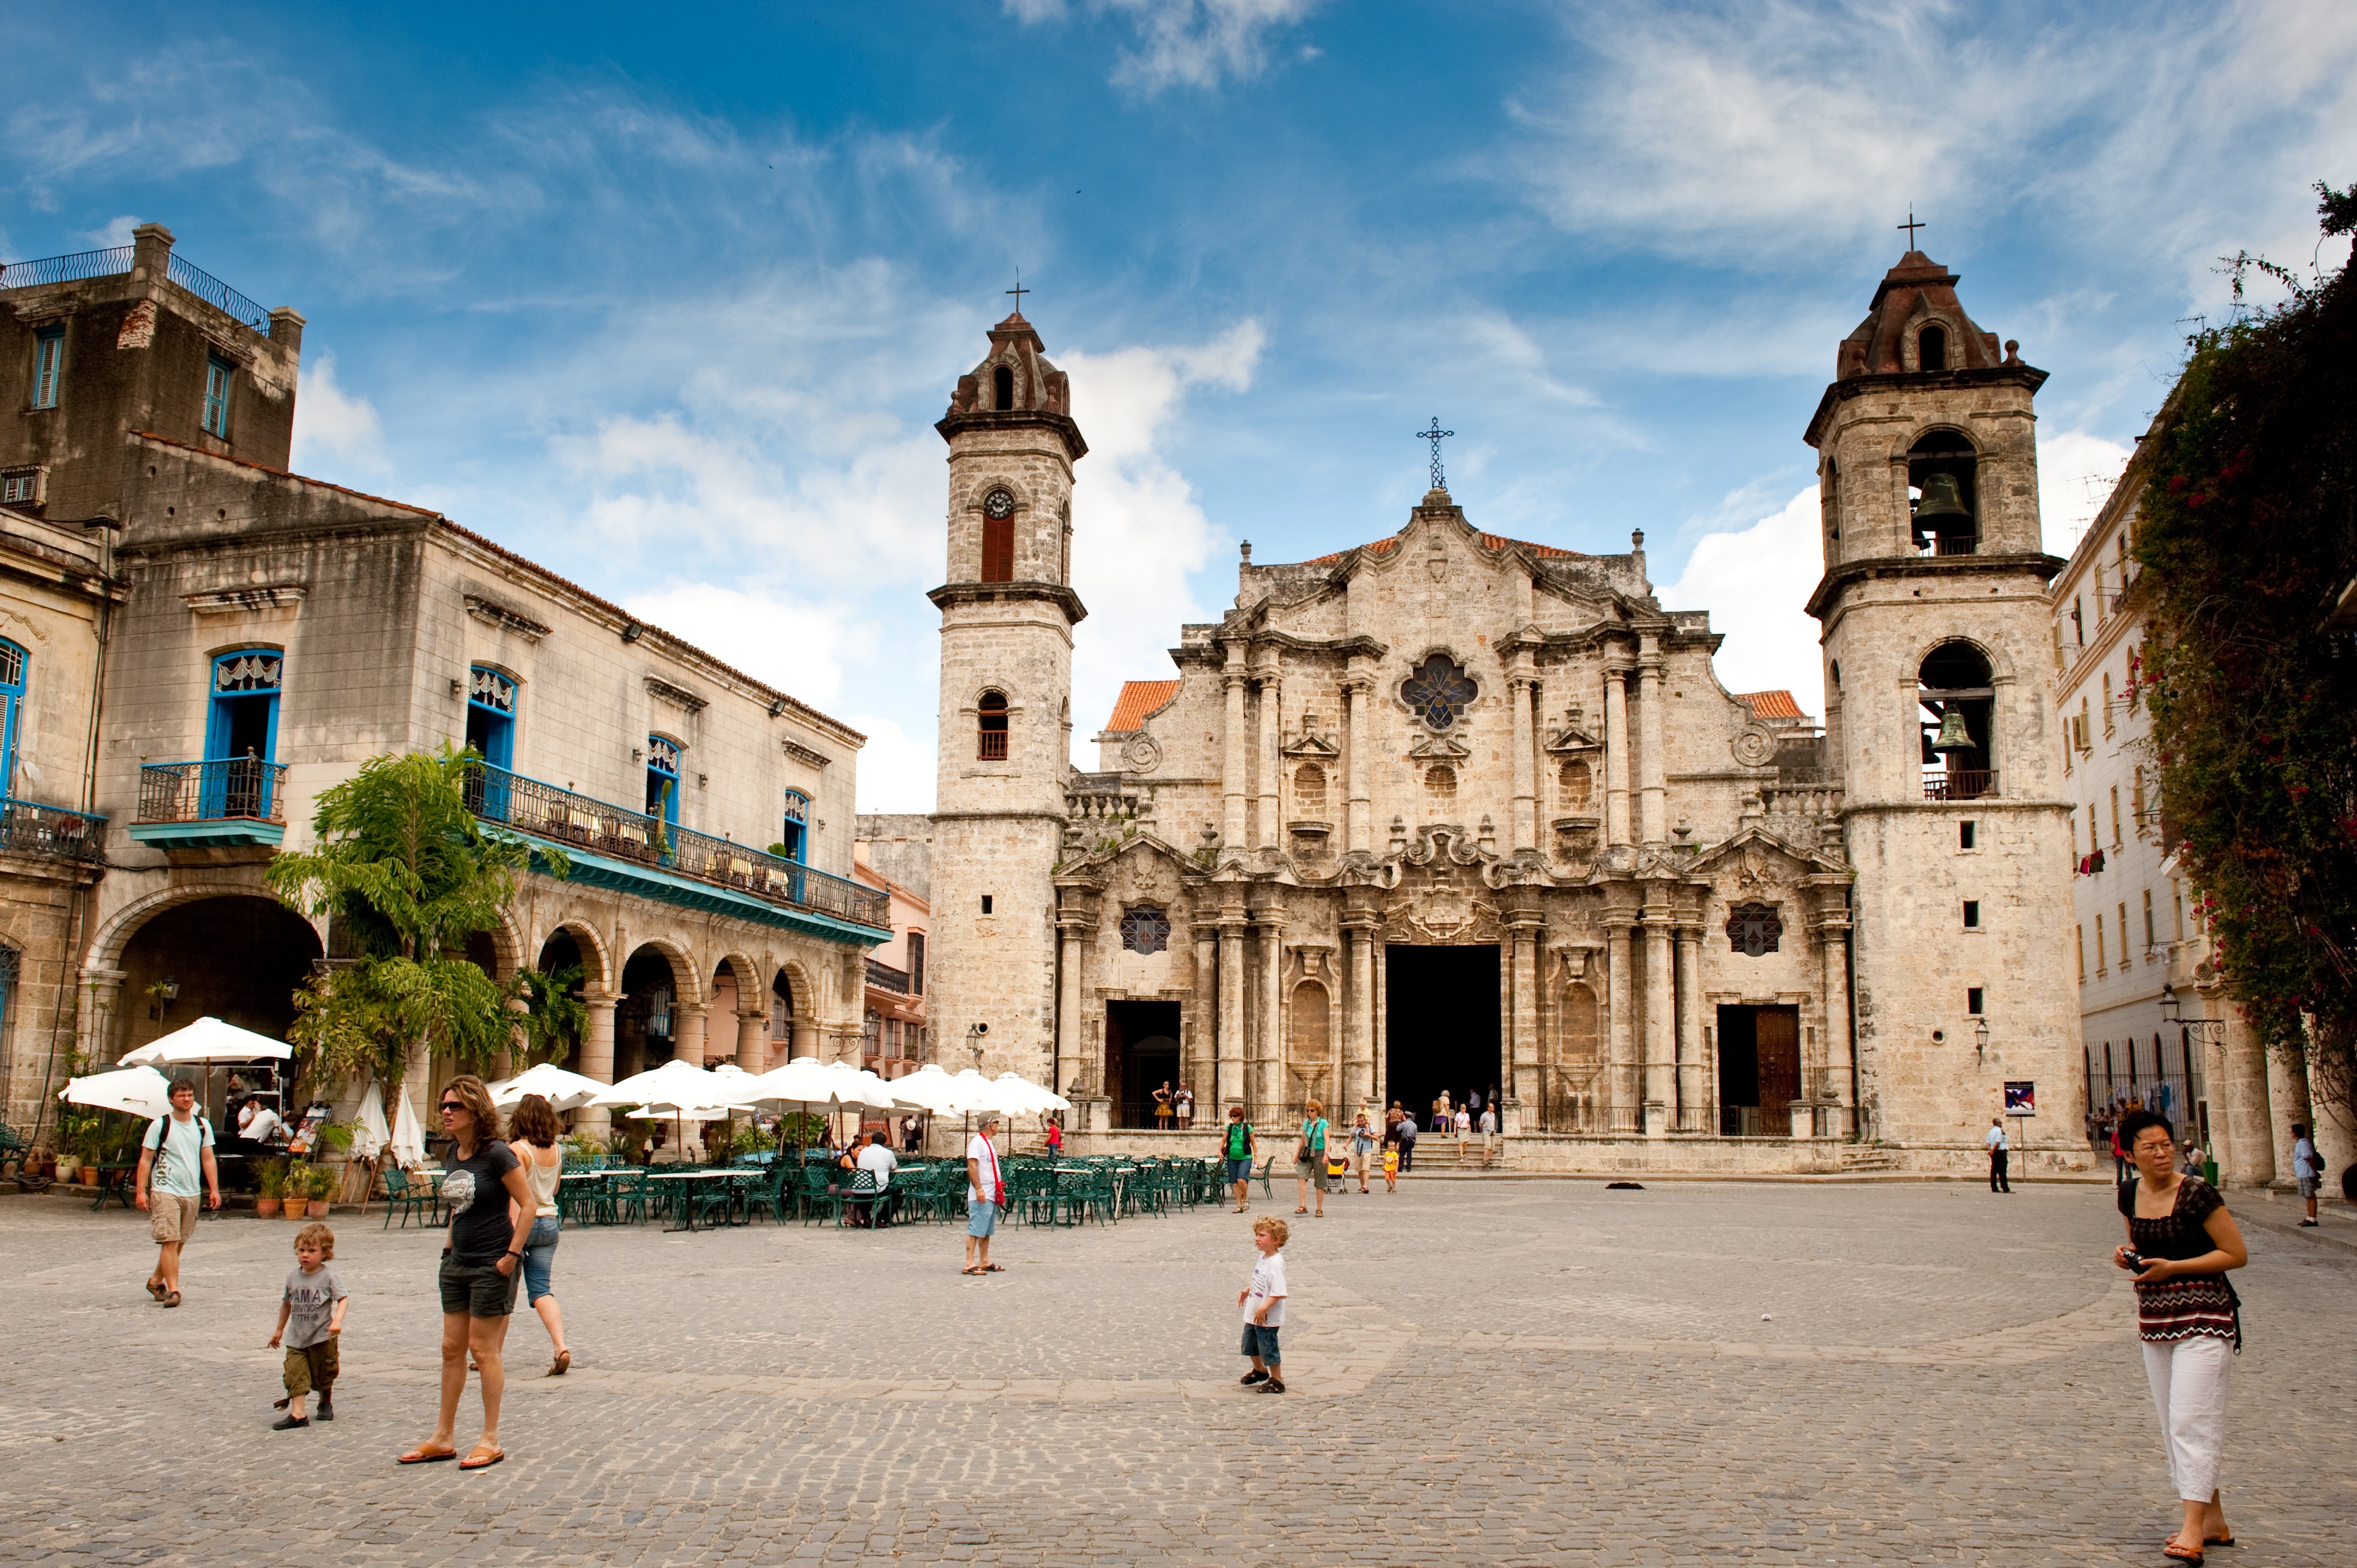 Kuba Havanna Plaza de Catedral Kathedrale San Cristobal